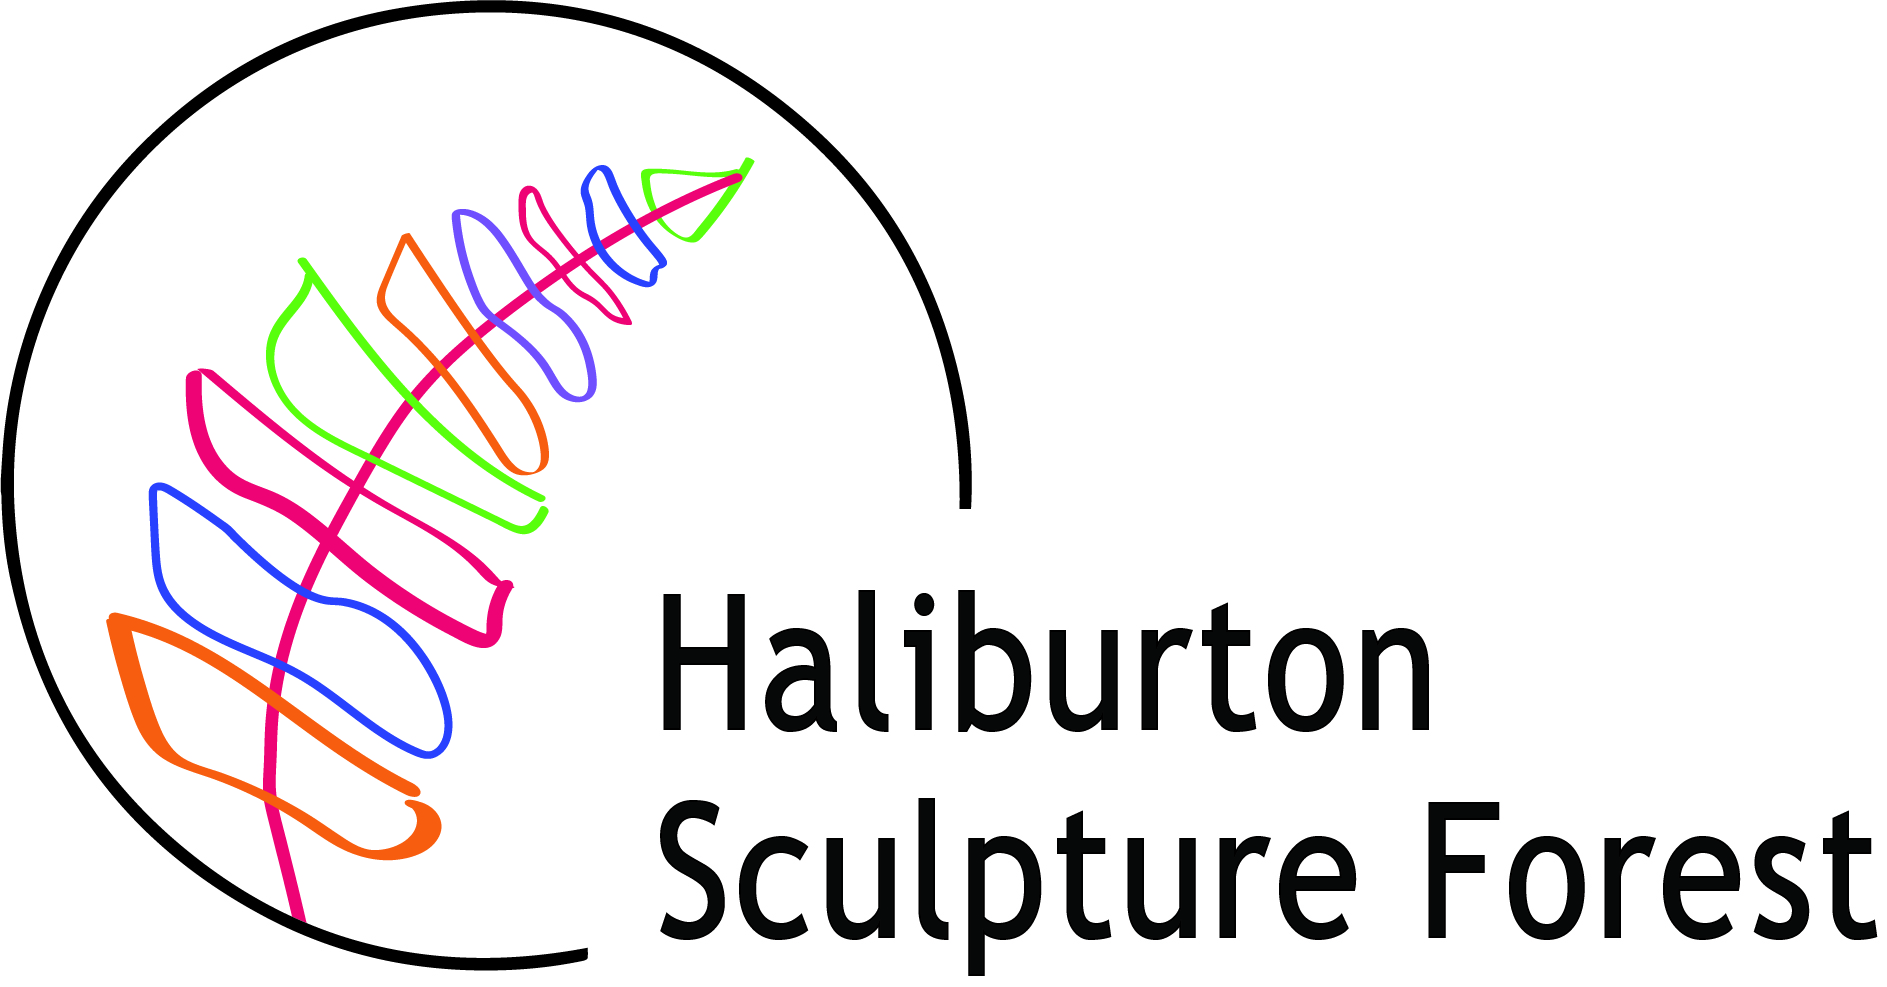 Haliburton Sculpture Forest logo in colour